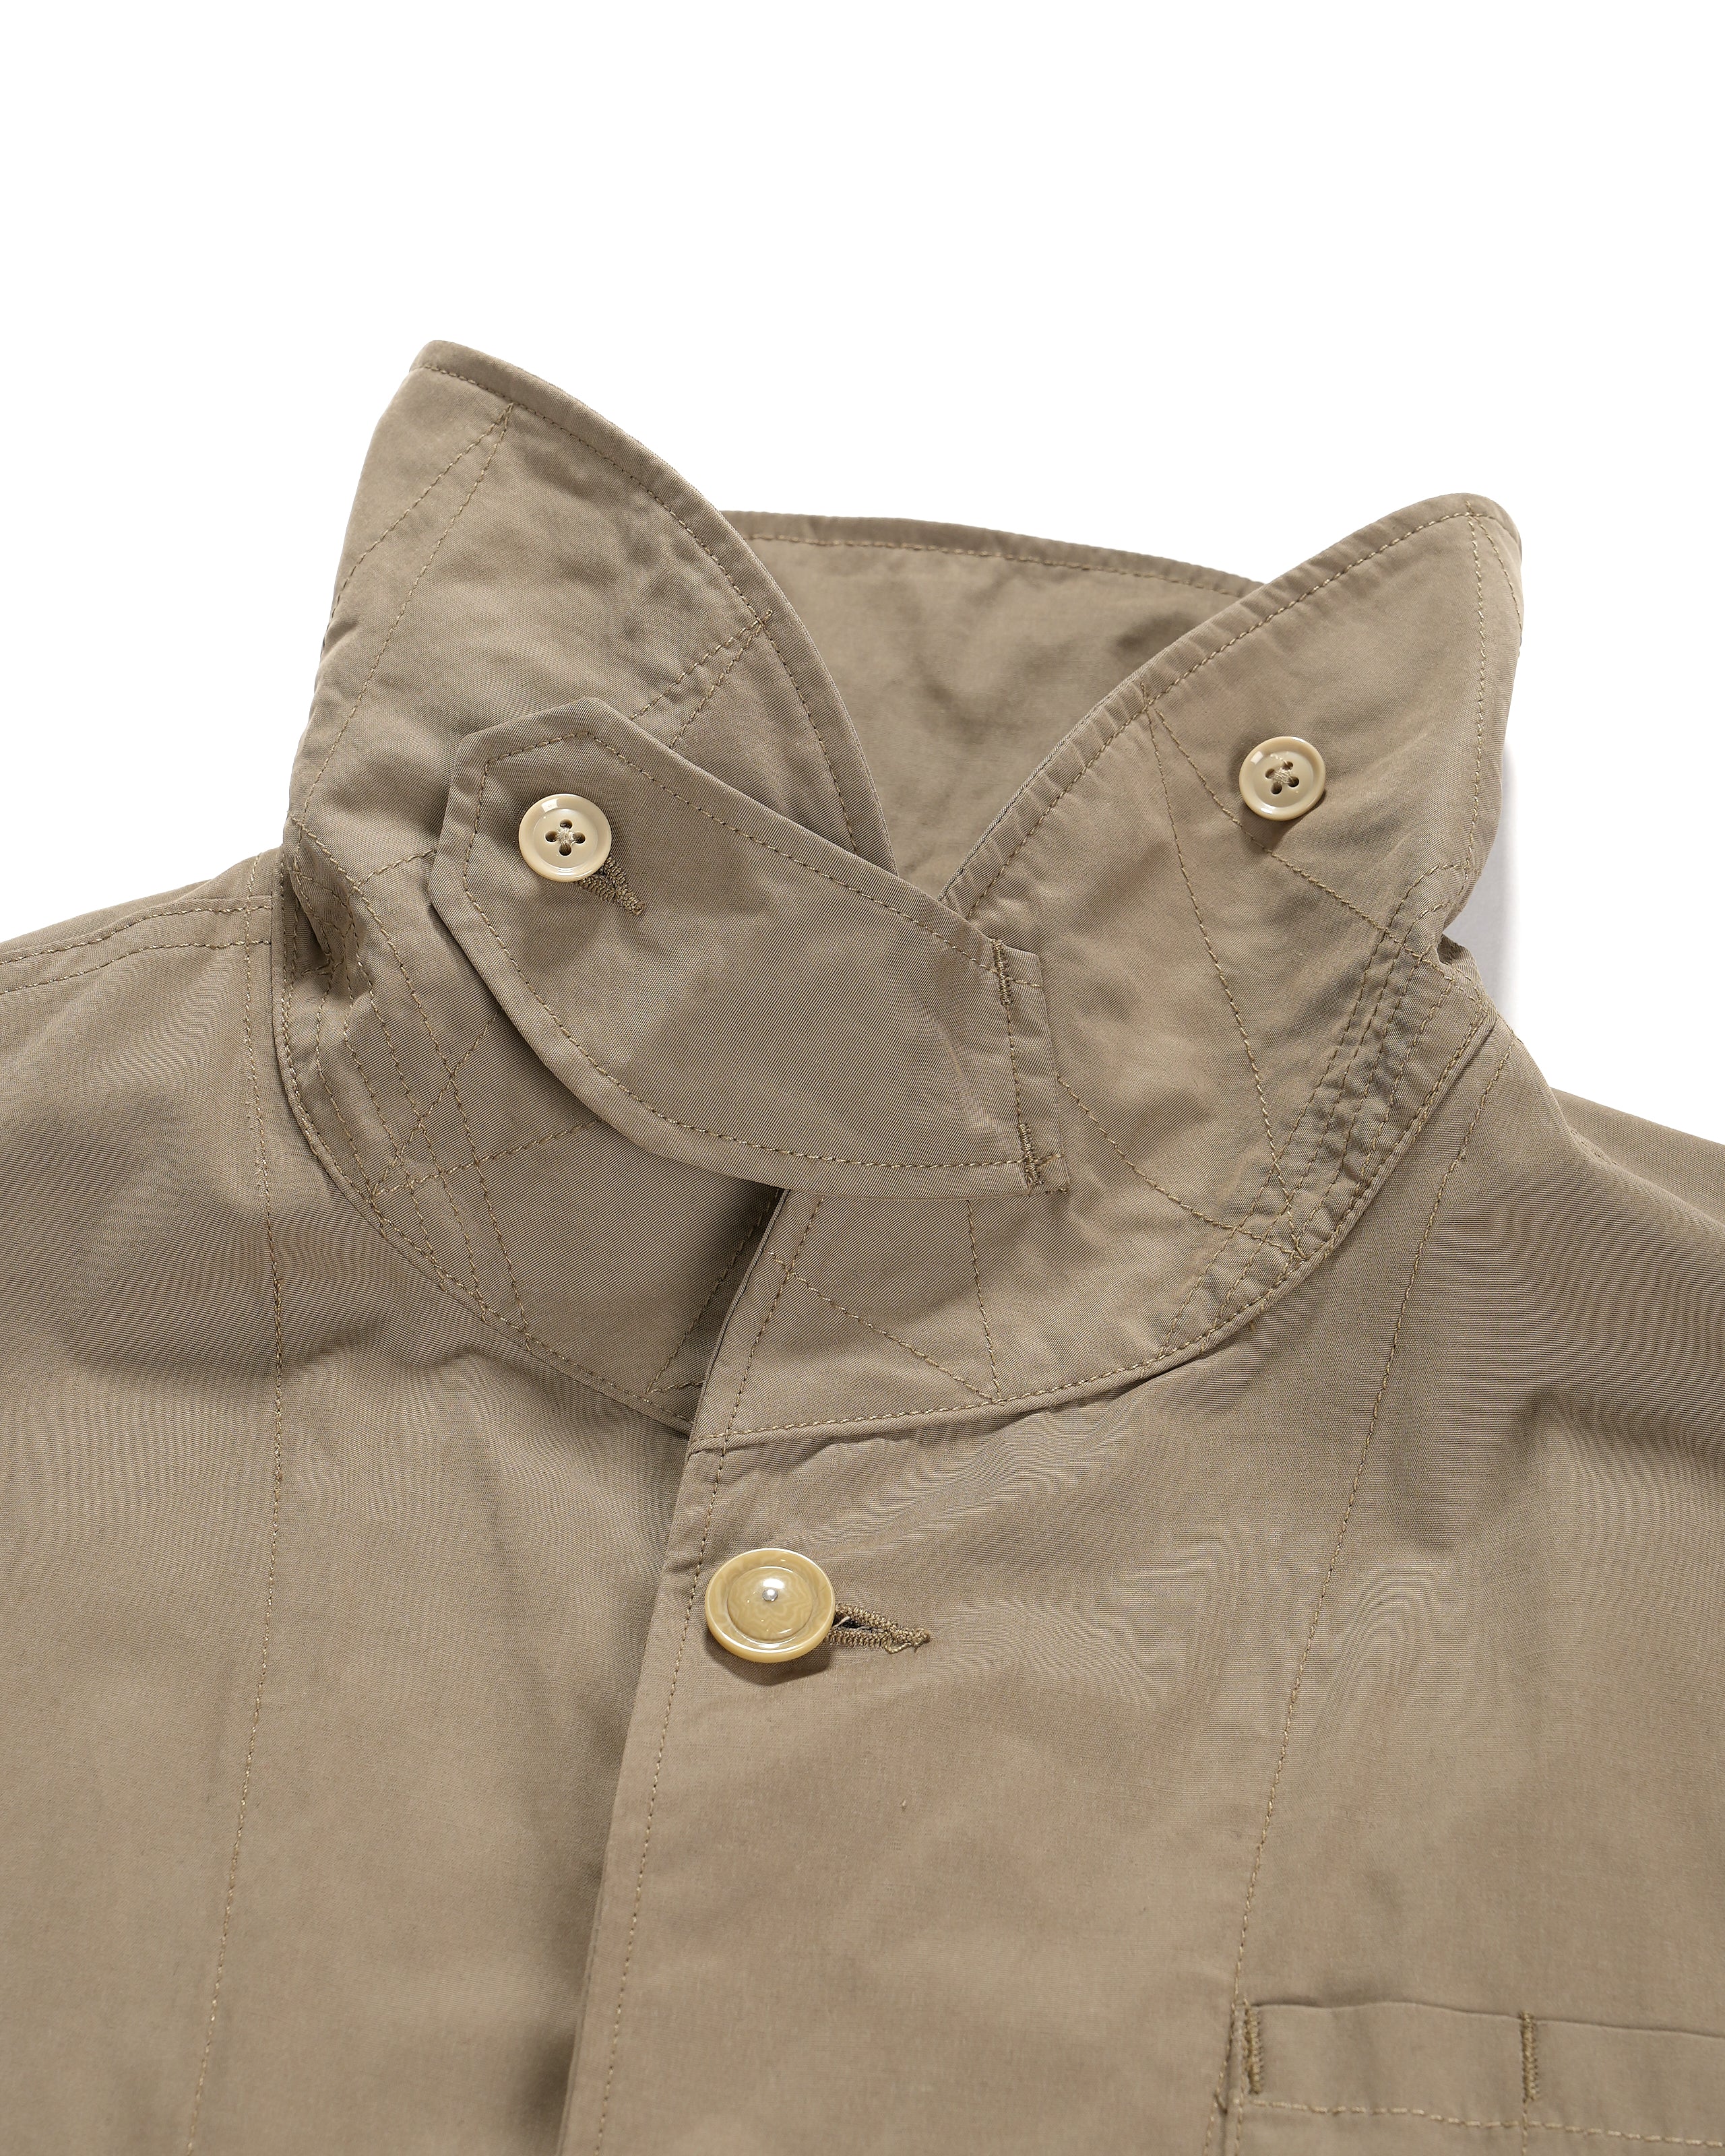 Maine Guide Jacket - Khaki PC Coated Cloth